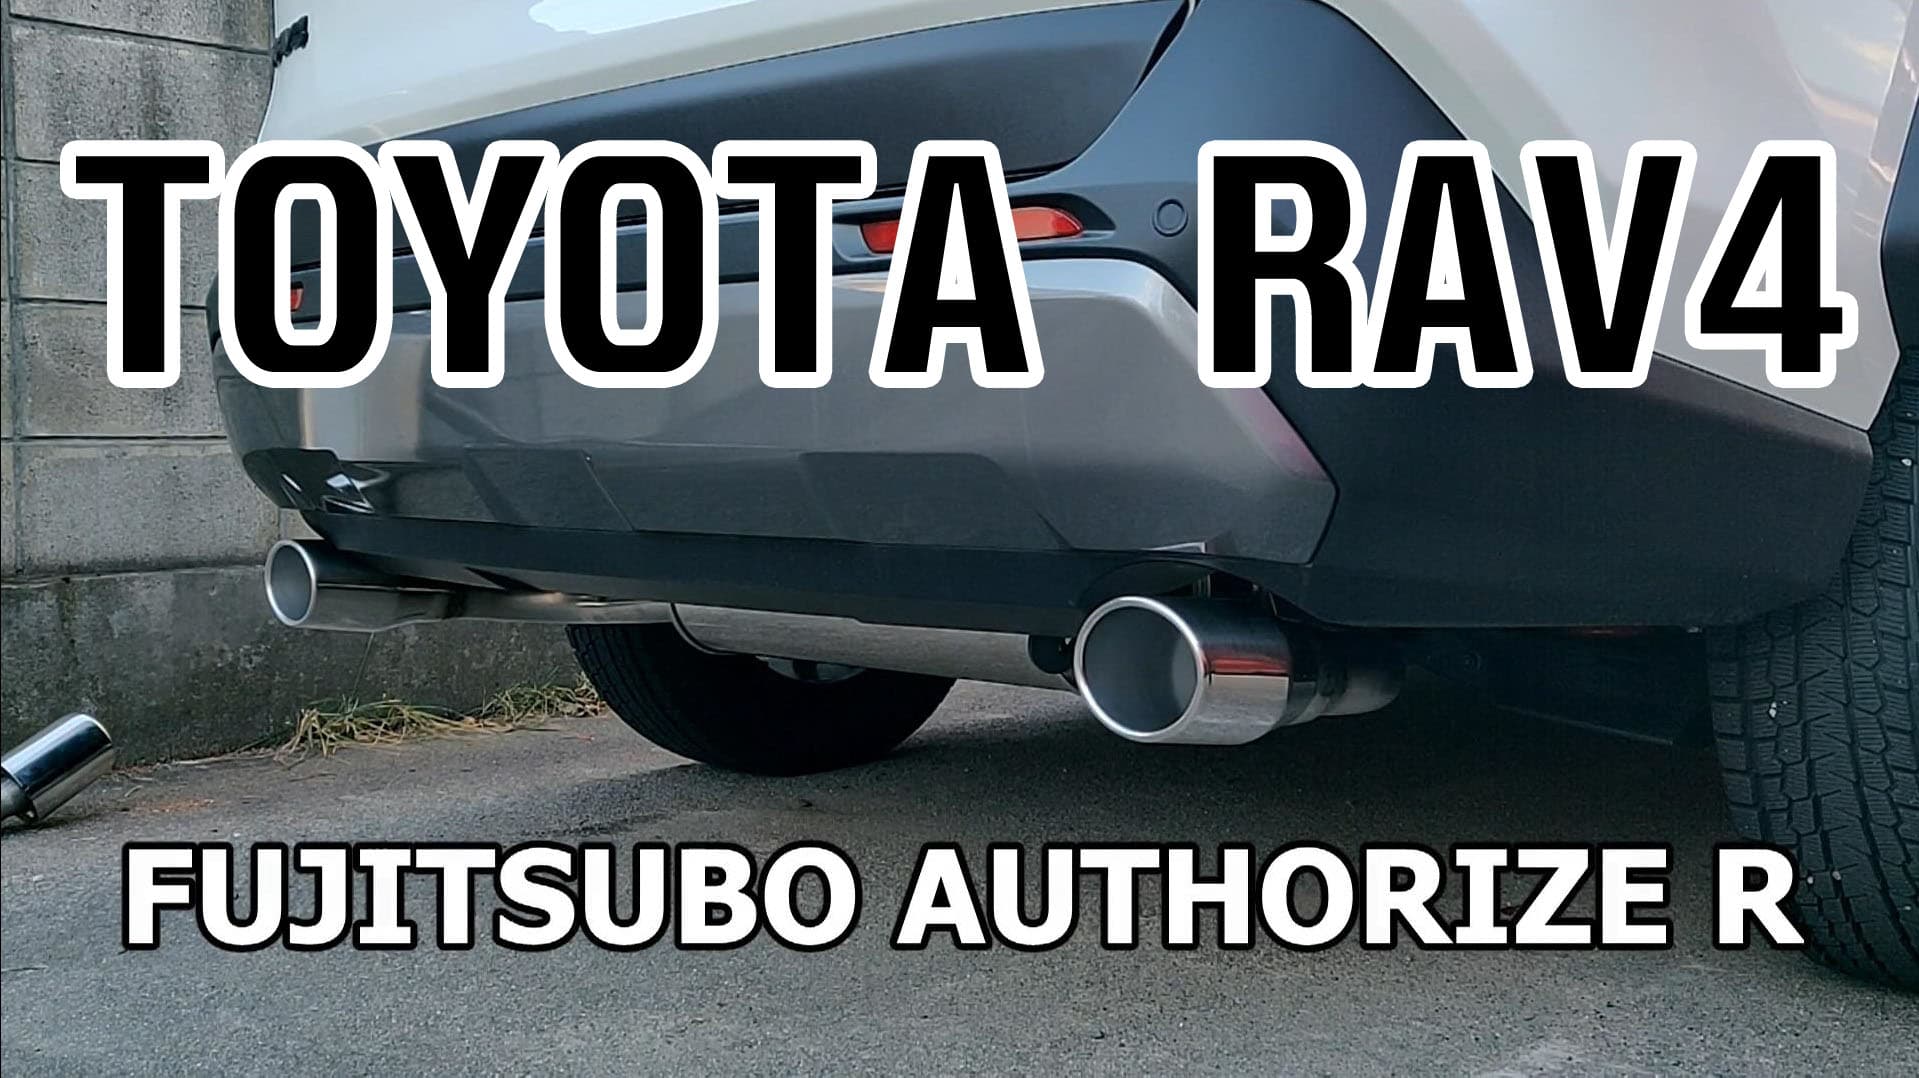 【RAV4】FUJITSUBO マフラー Authorize Rを購入。